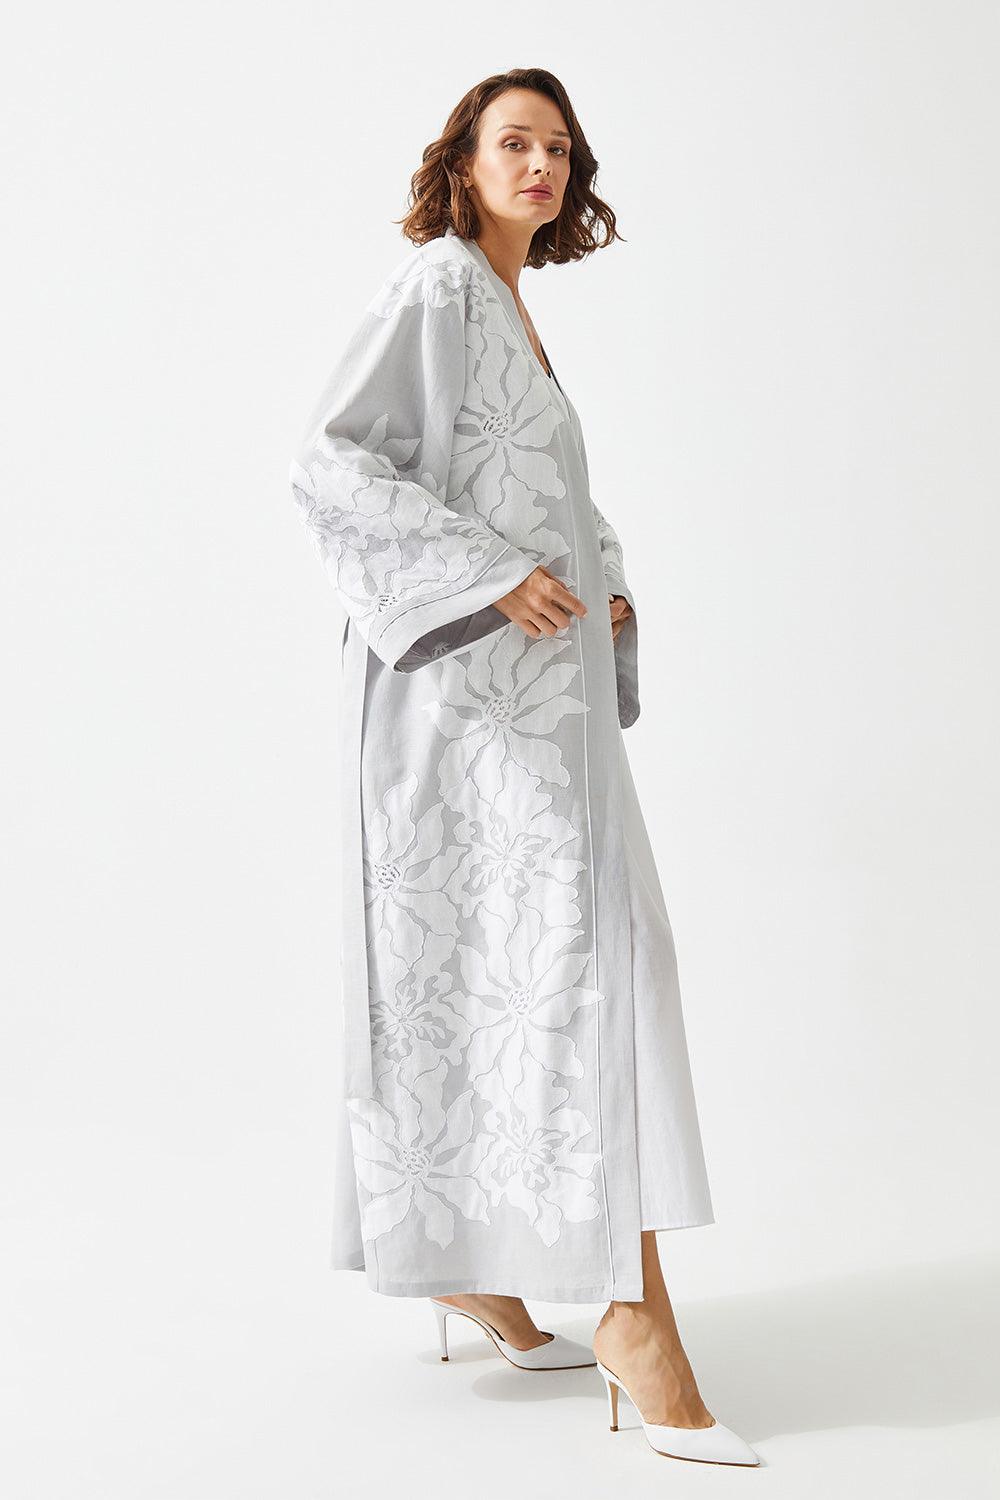 Luxury Loungewear - Silk Kimono Robes, Kaftans